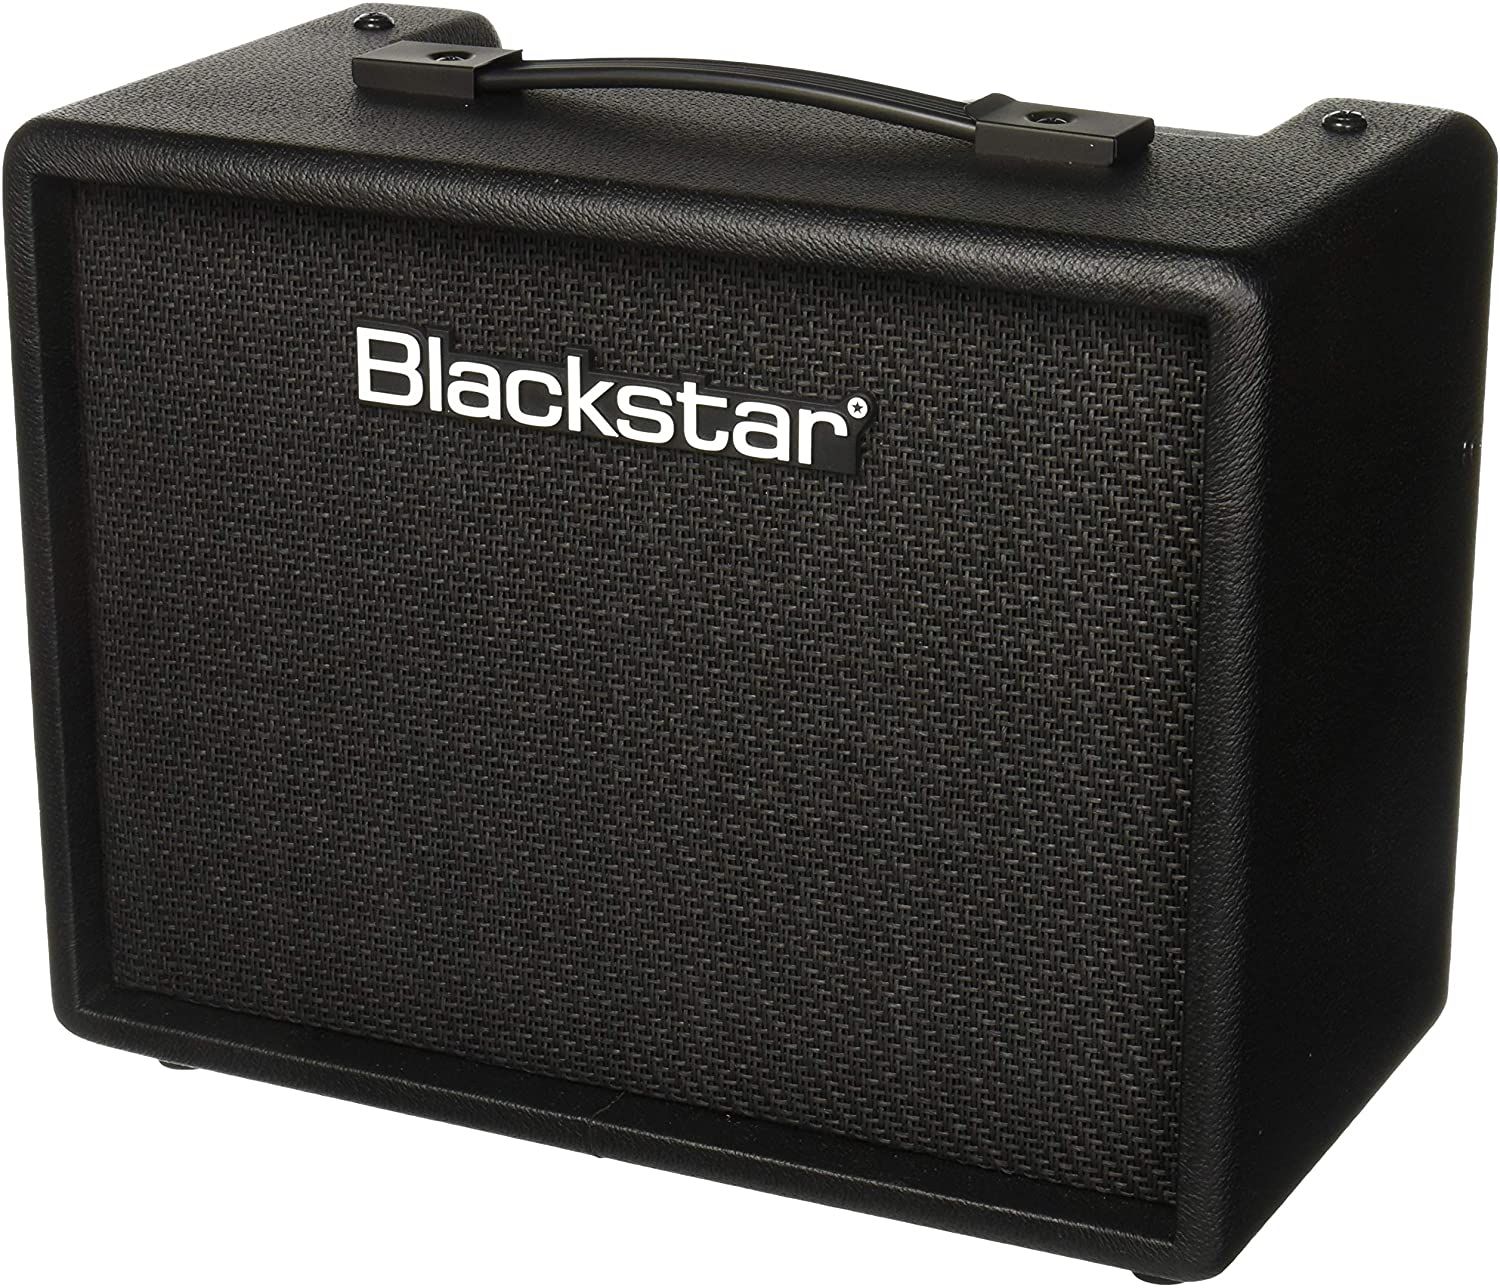 Blackstar guitar amp ideal for beginners